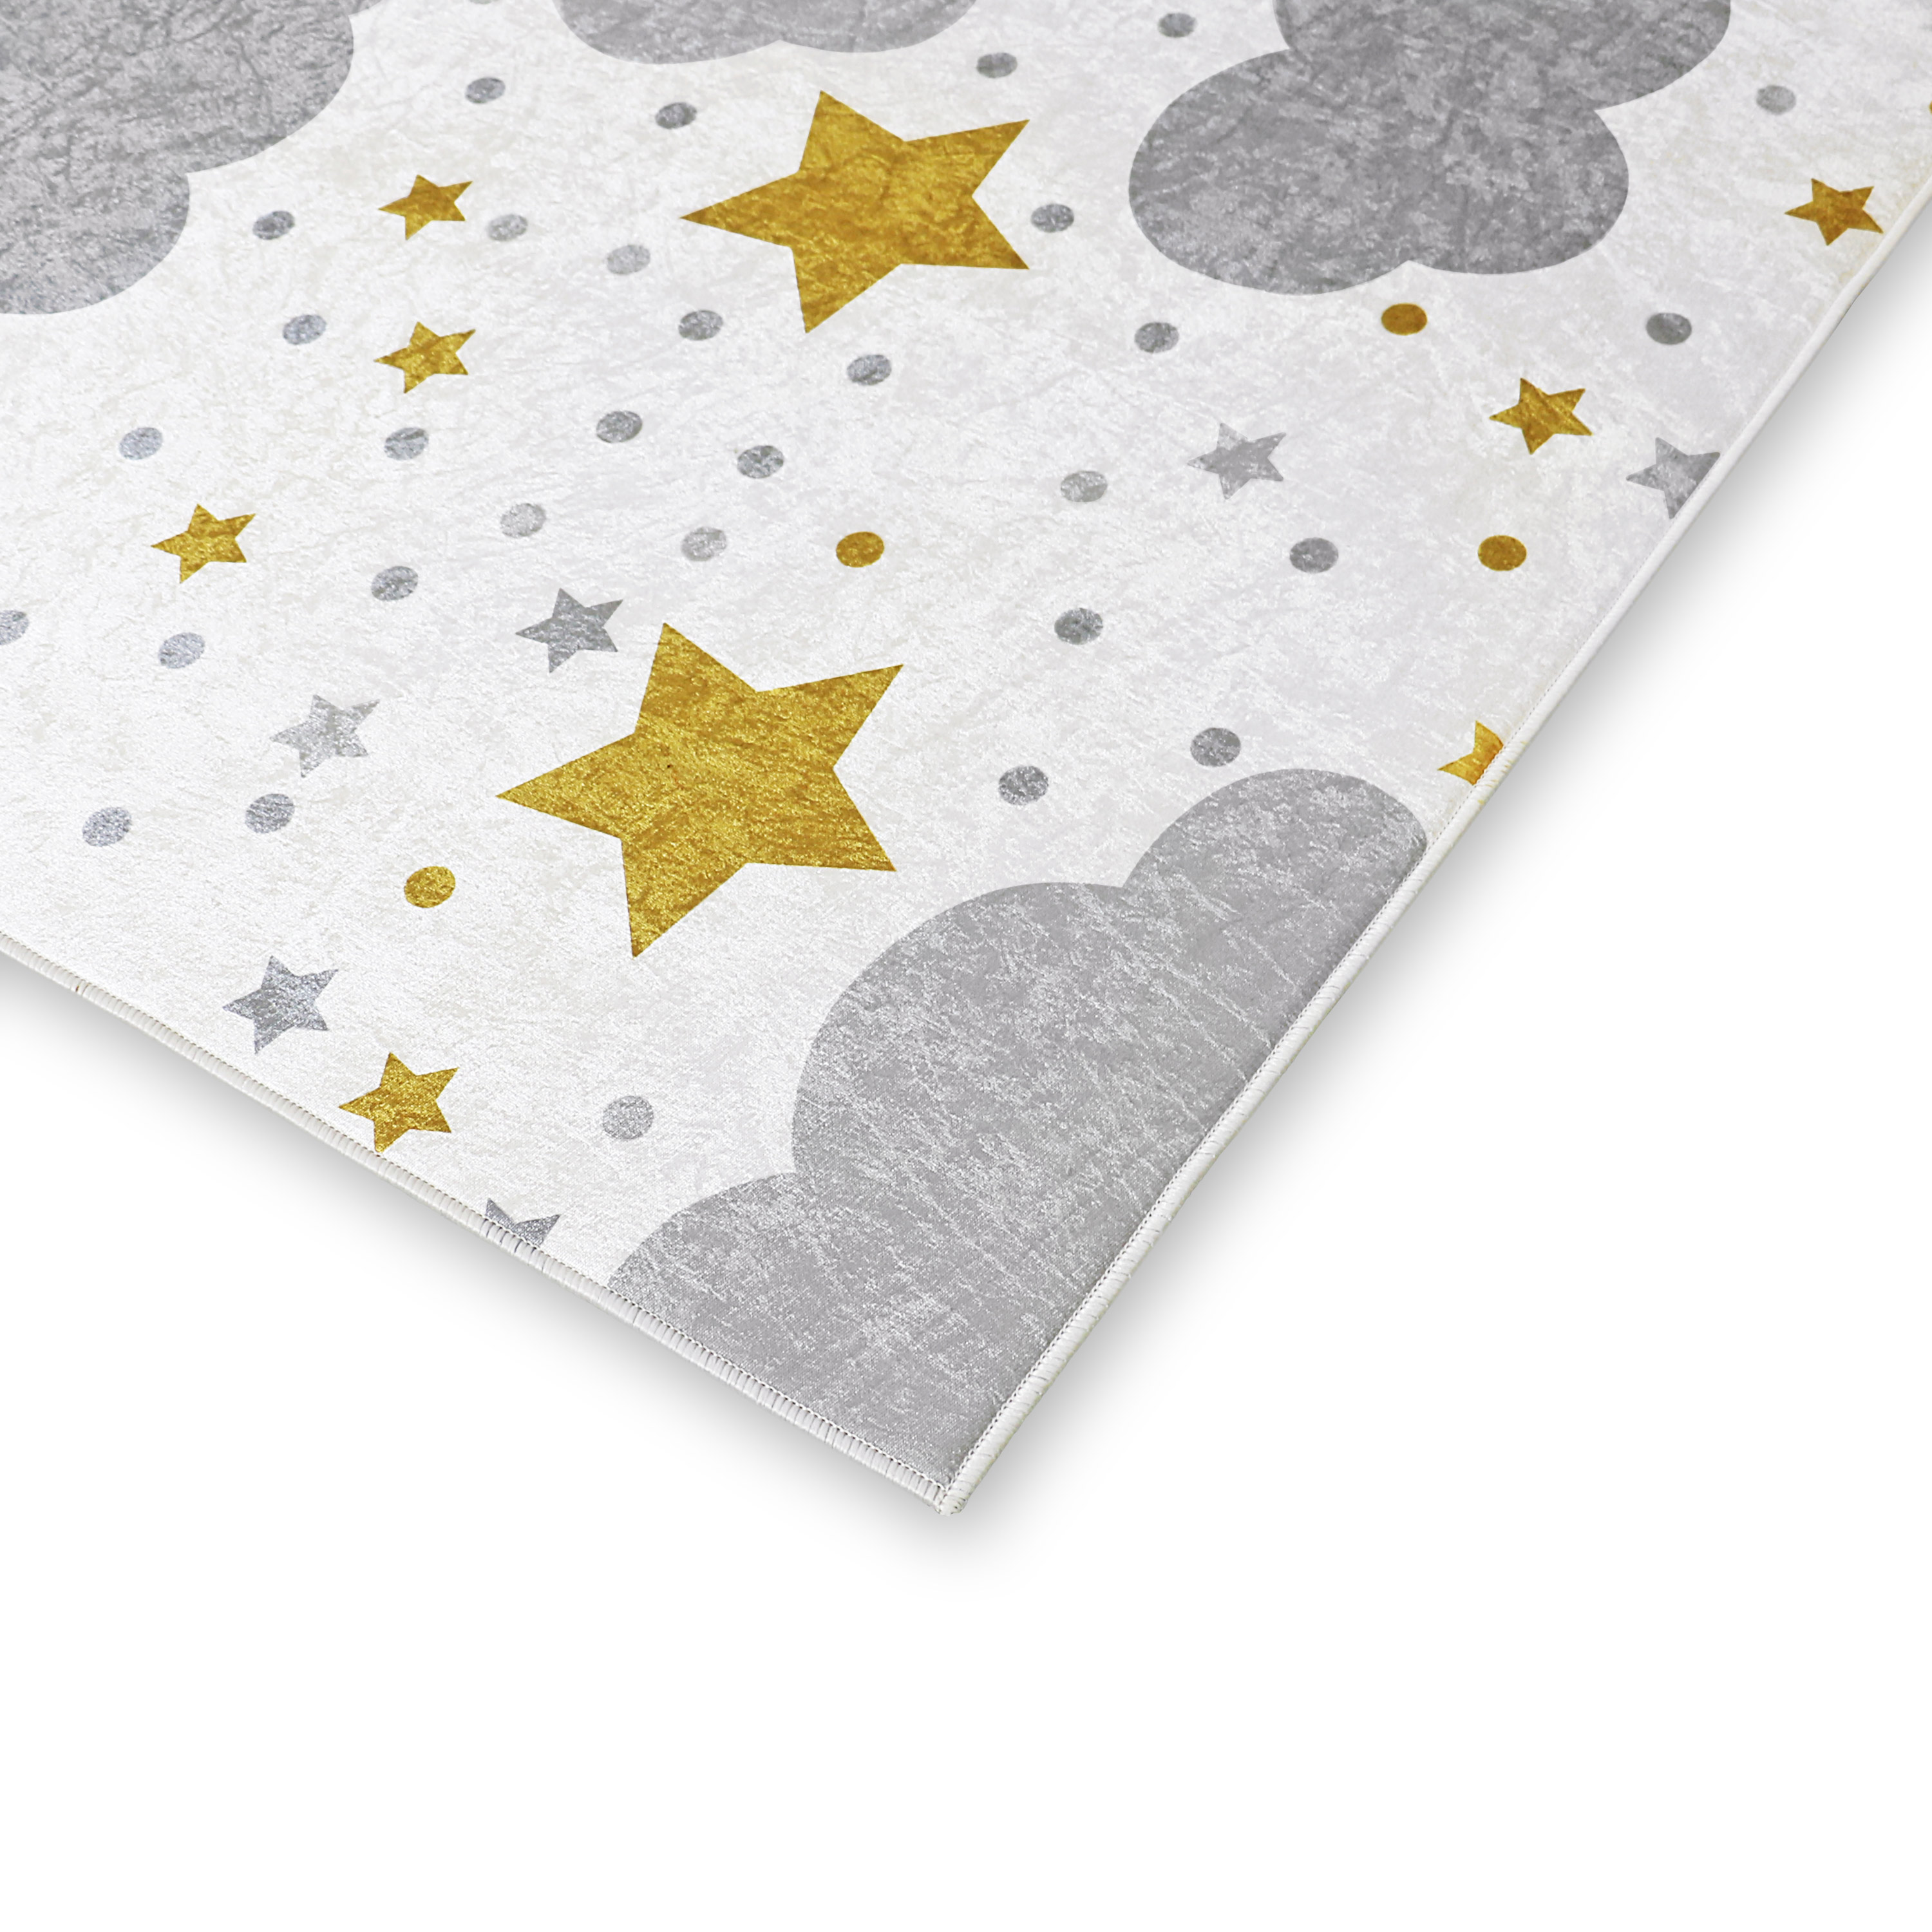 Betten-ABC Kinderteppich – flachgewebt, Unterseite aus rutschfestem PVC-Leder, fünf Motive